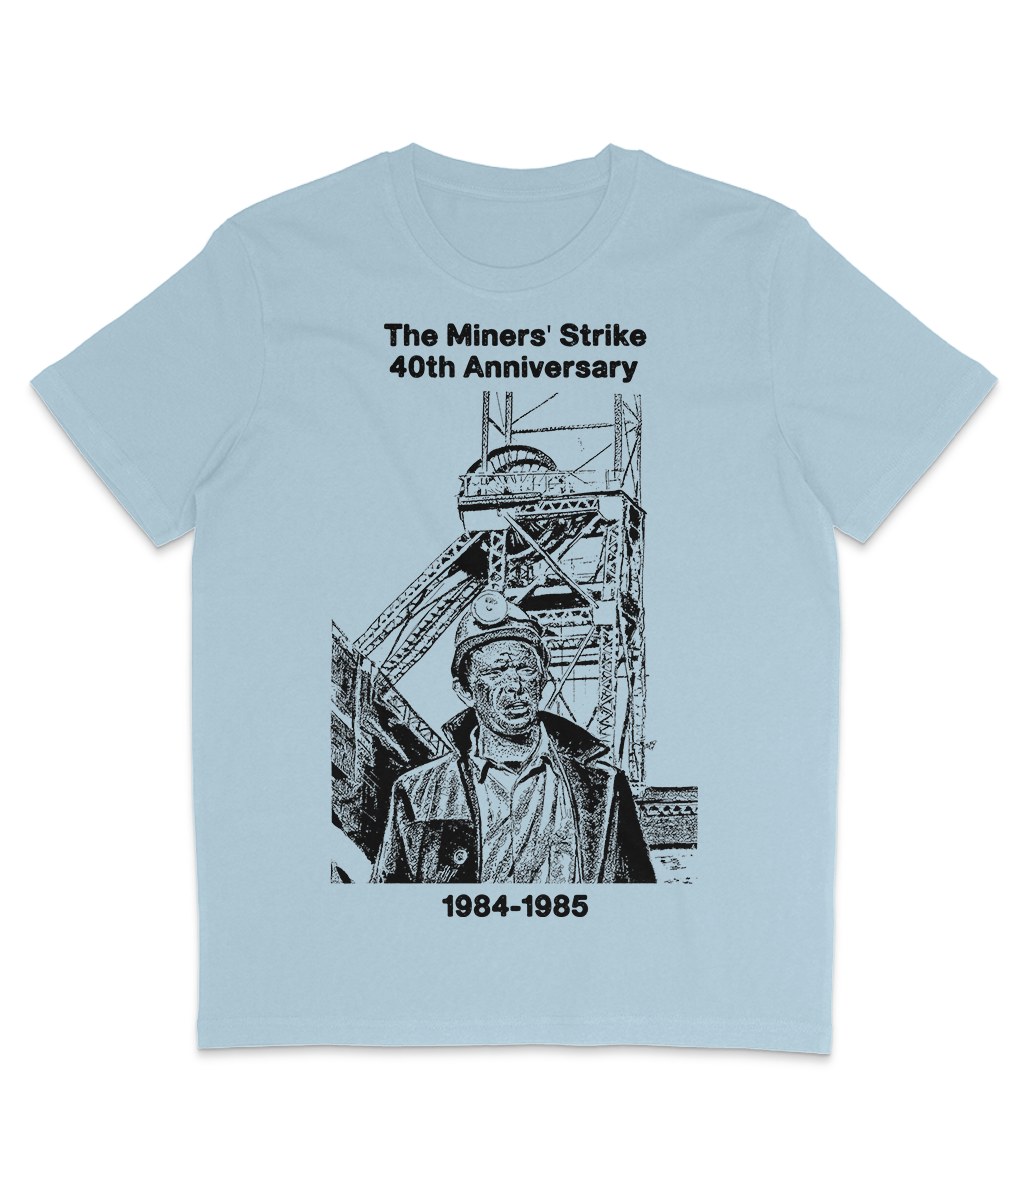 The Miner's Strike - 40th Anniversary - 1984-1985